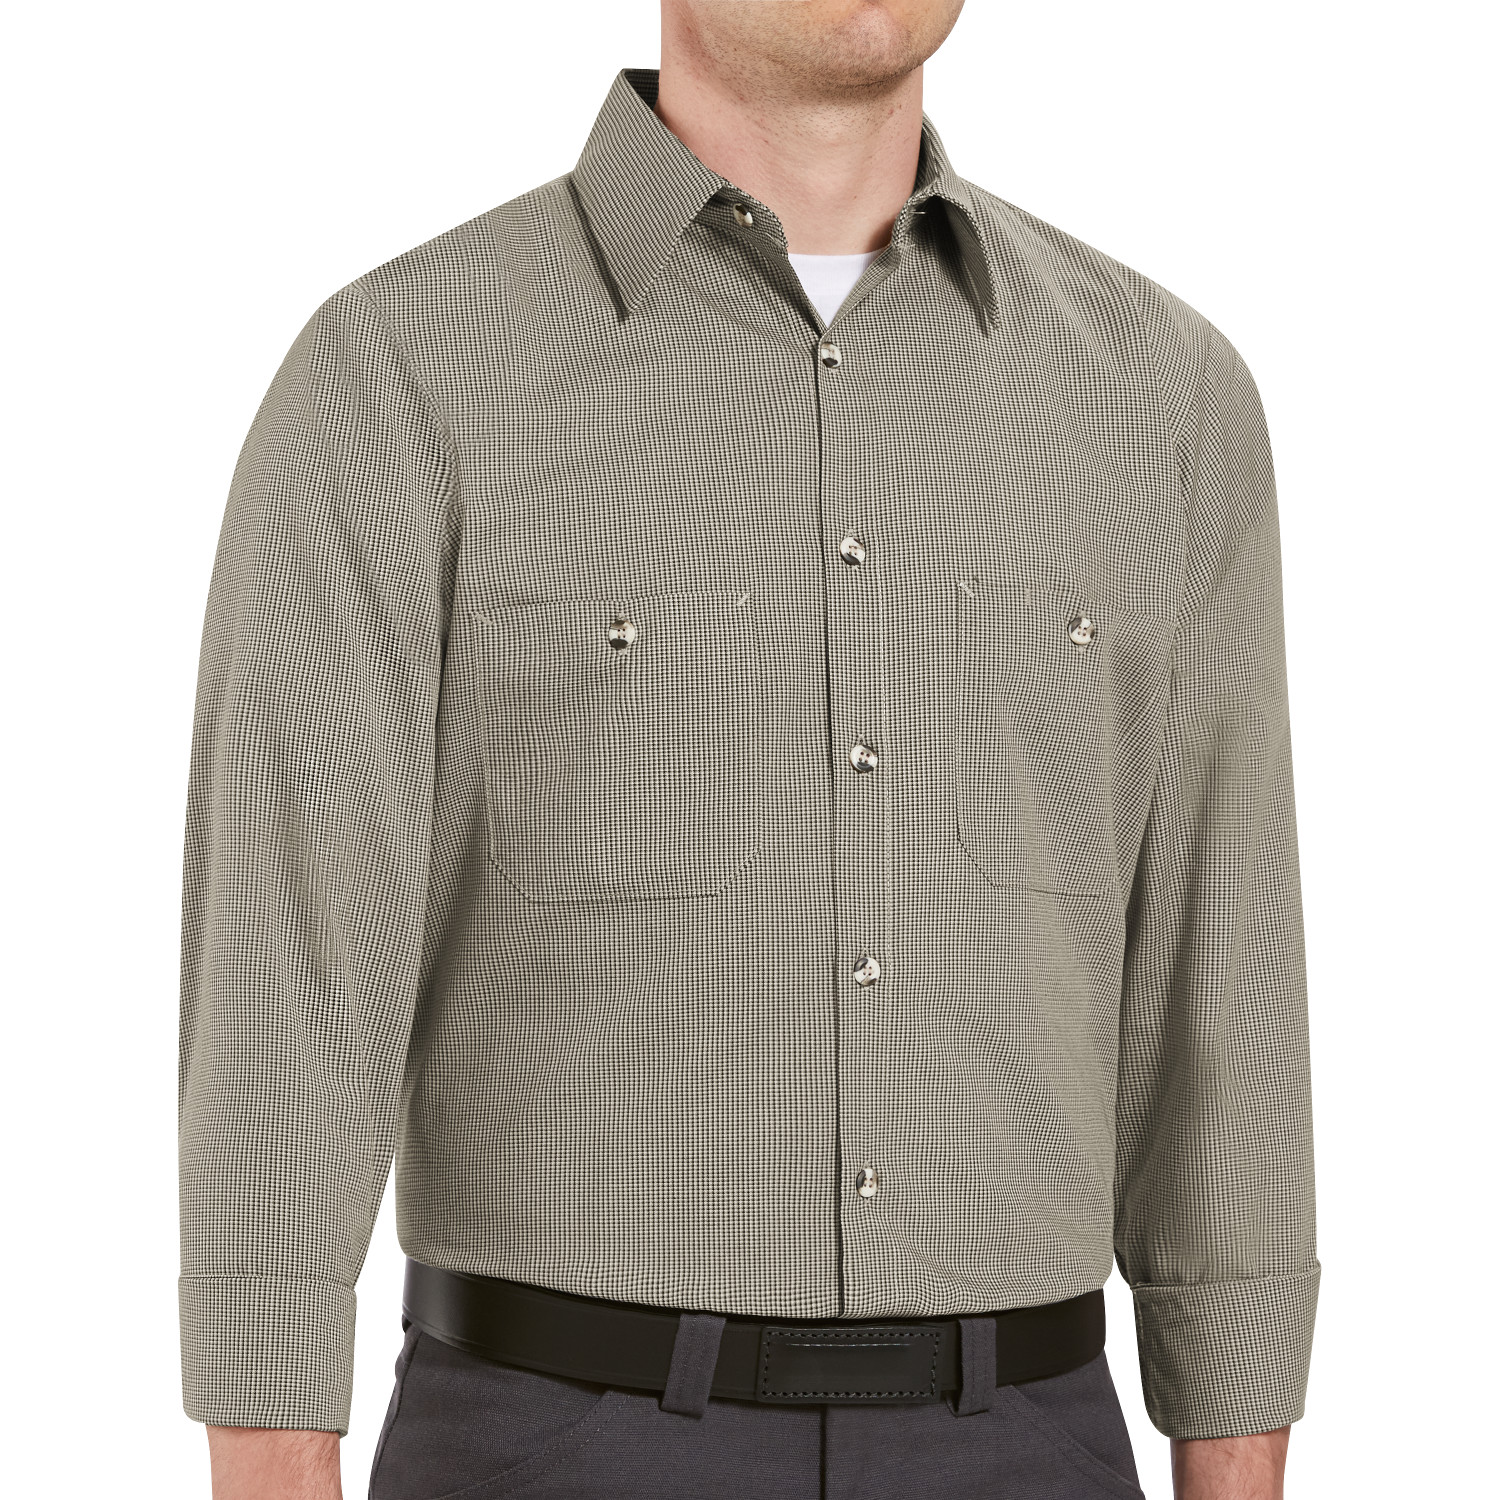 Men's Micro-Check Uniform Shirt SP10KB